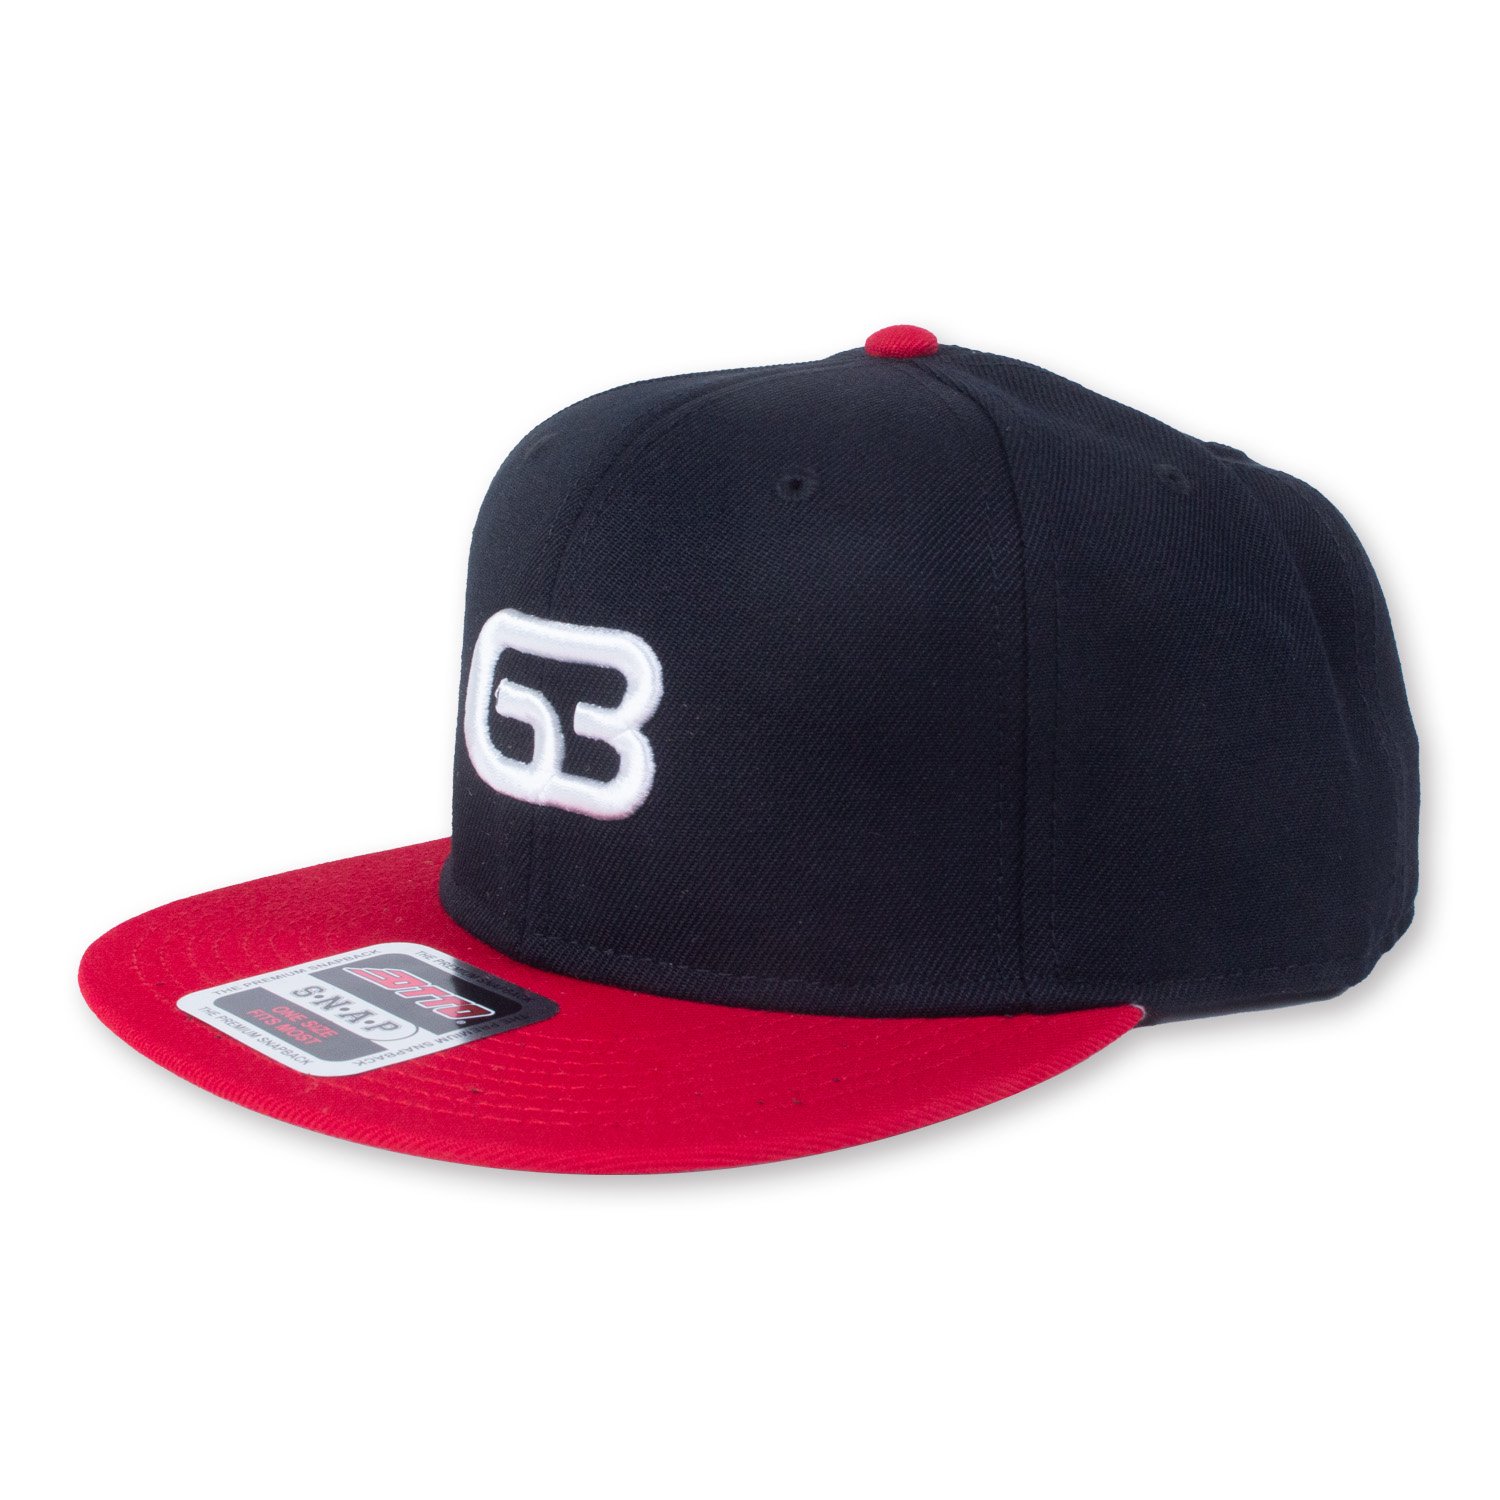 GB LOGO FLAT VISOR CAP【BLACK/RED】